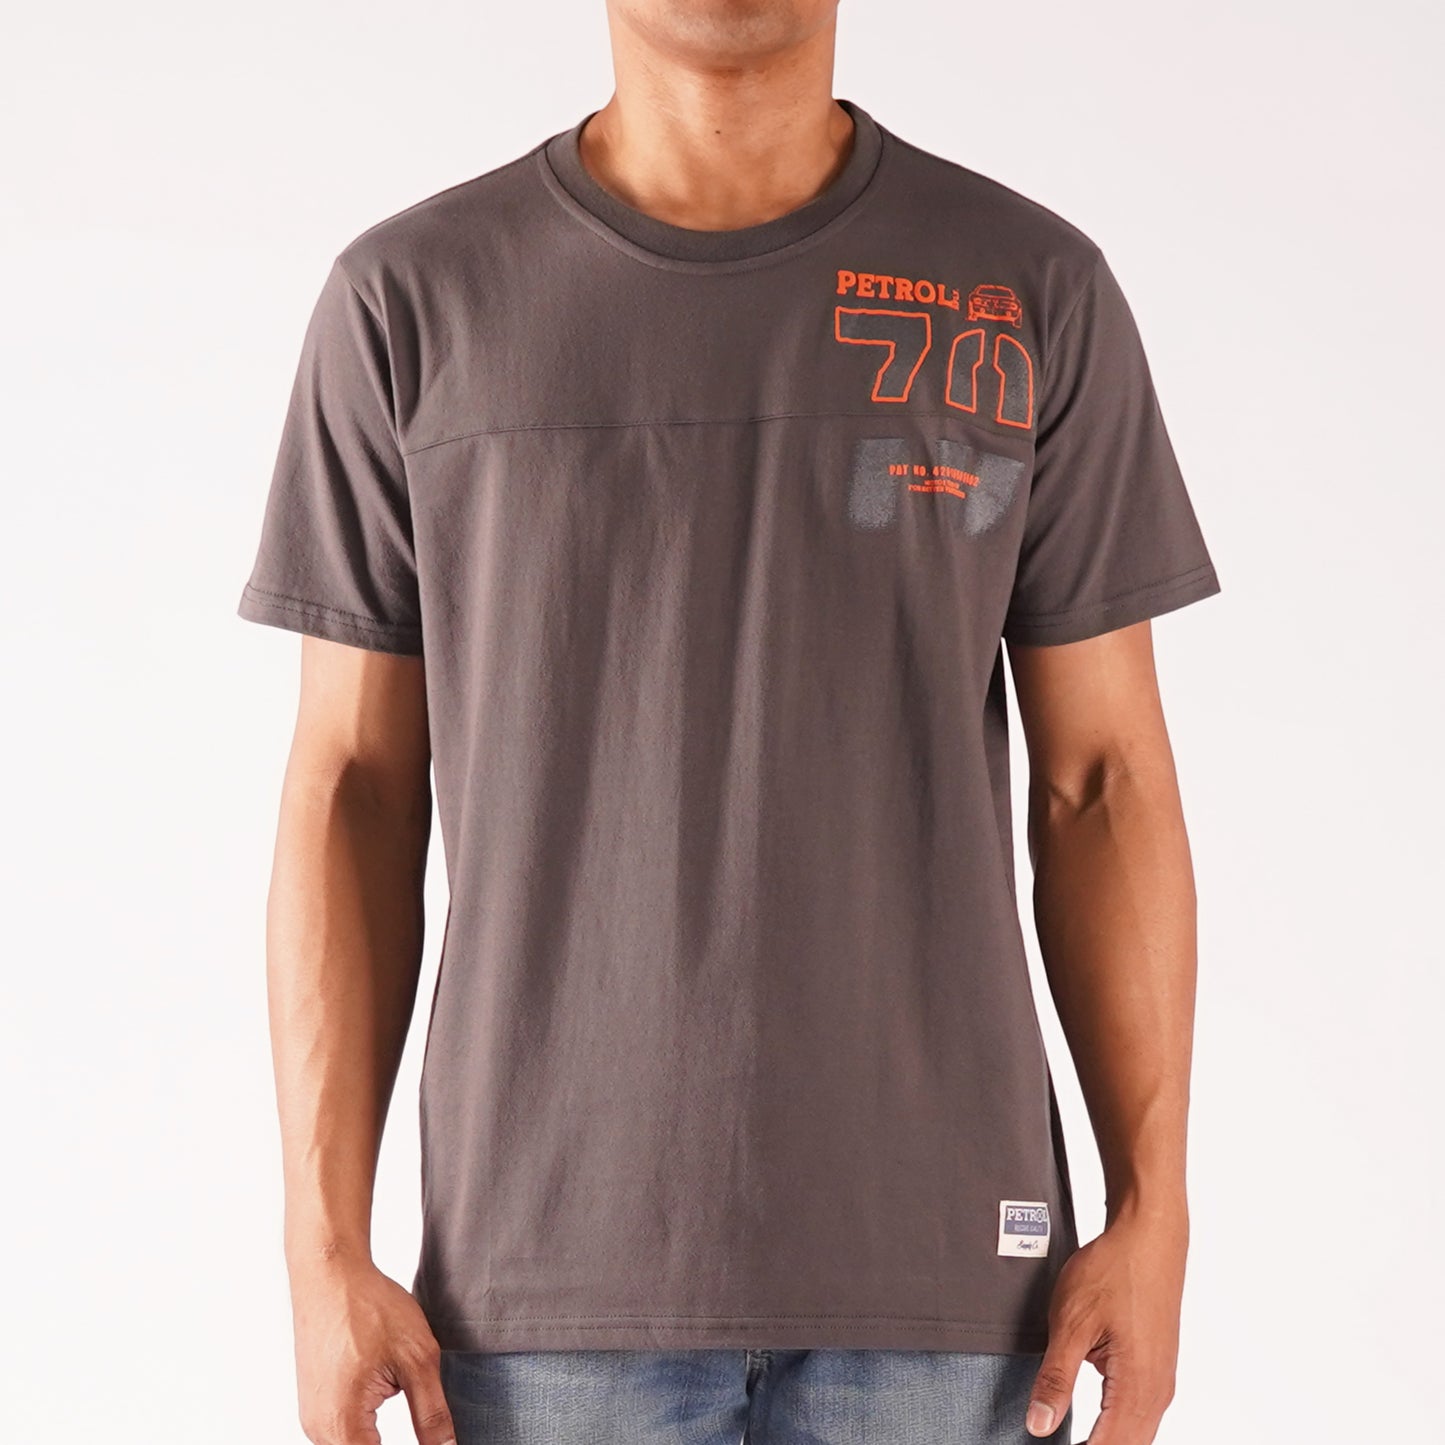 Petrol Basic Tees for Men Slim Fitting Shirt CVC Jersey Fabric Trendy fashion Casual Top T-shirt for Men 112724-U (Charcoal)